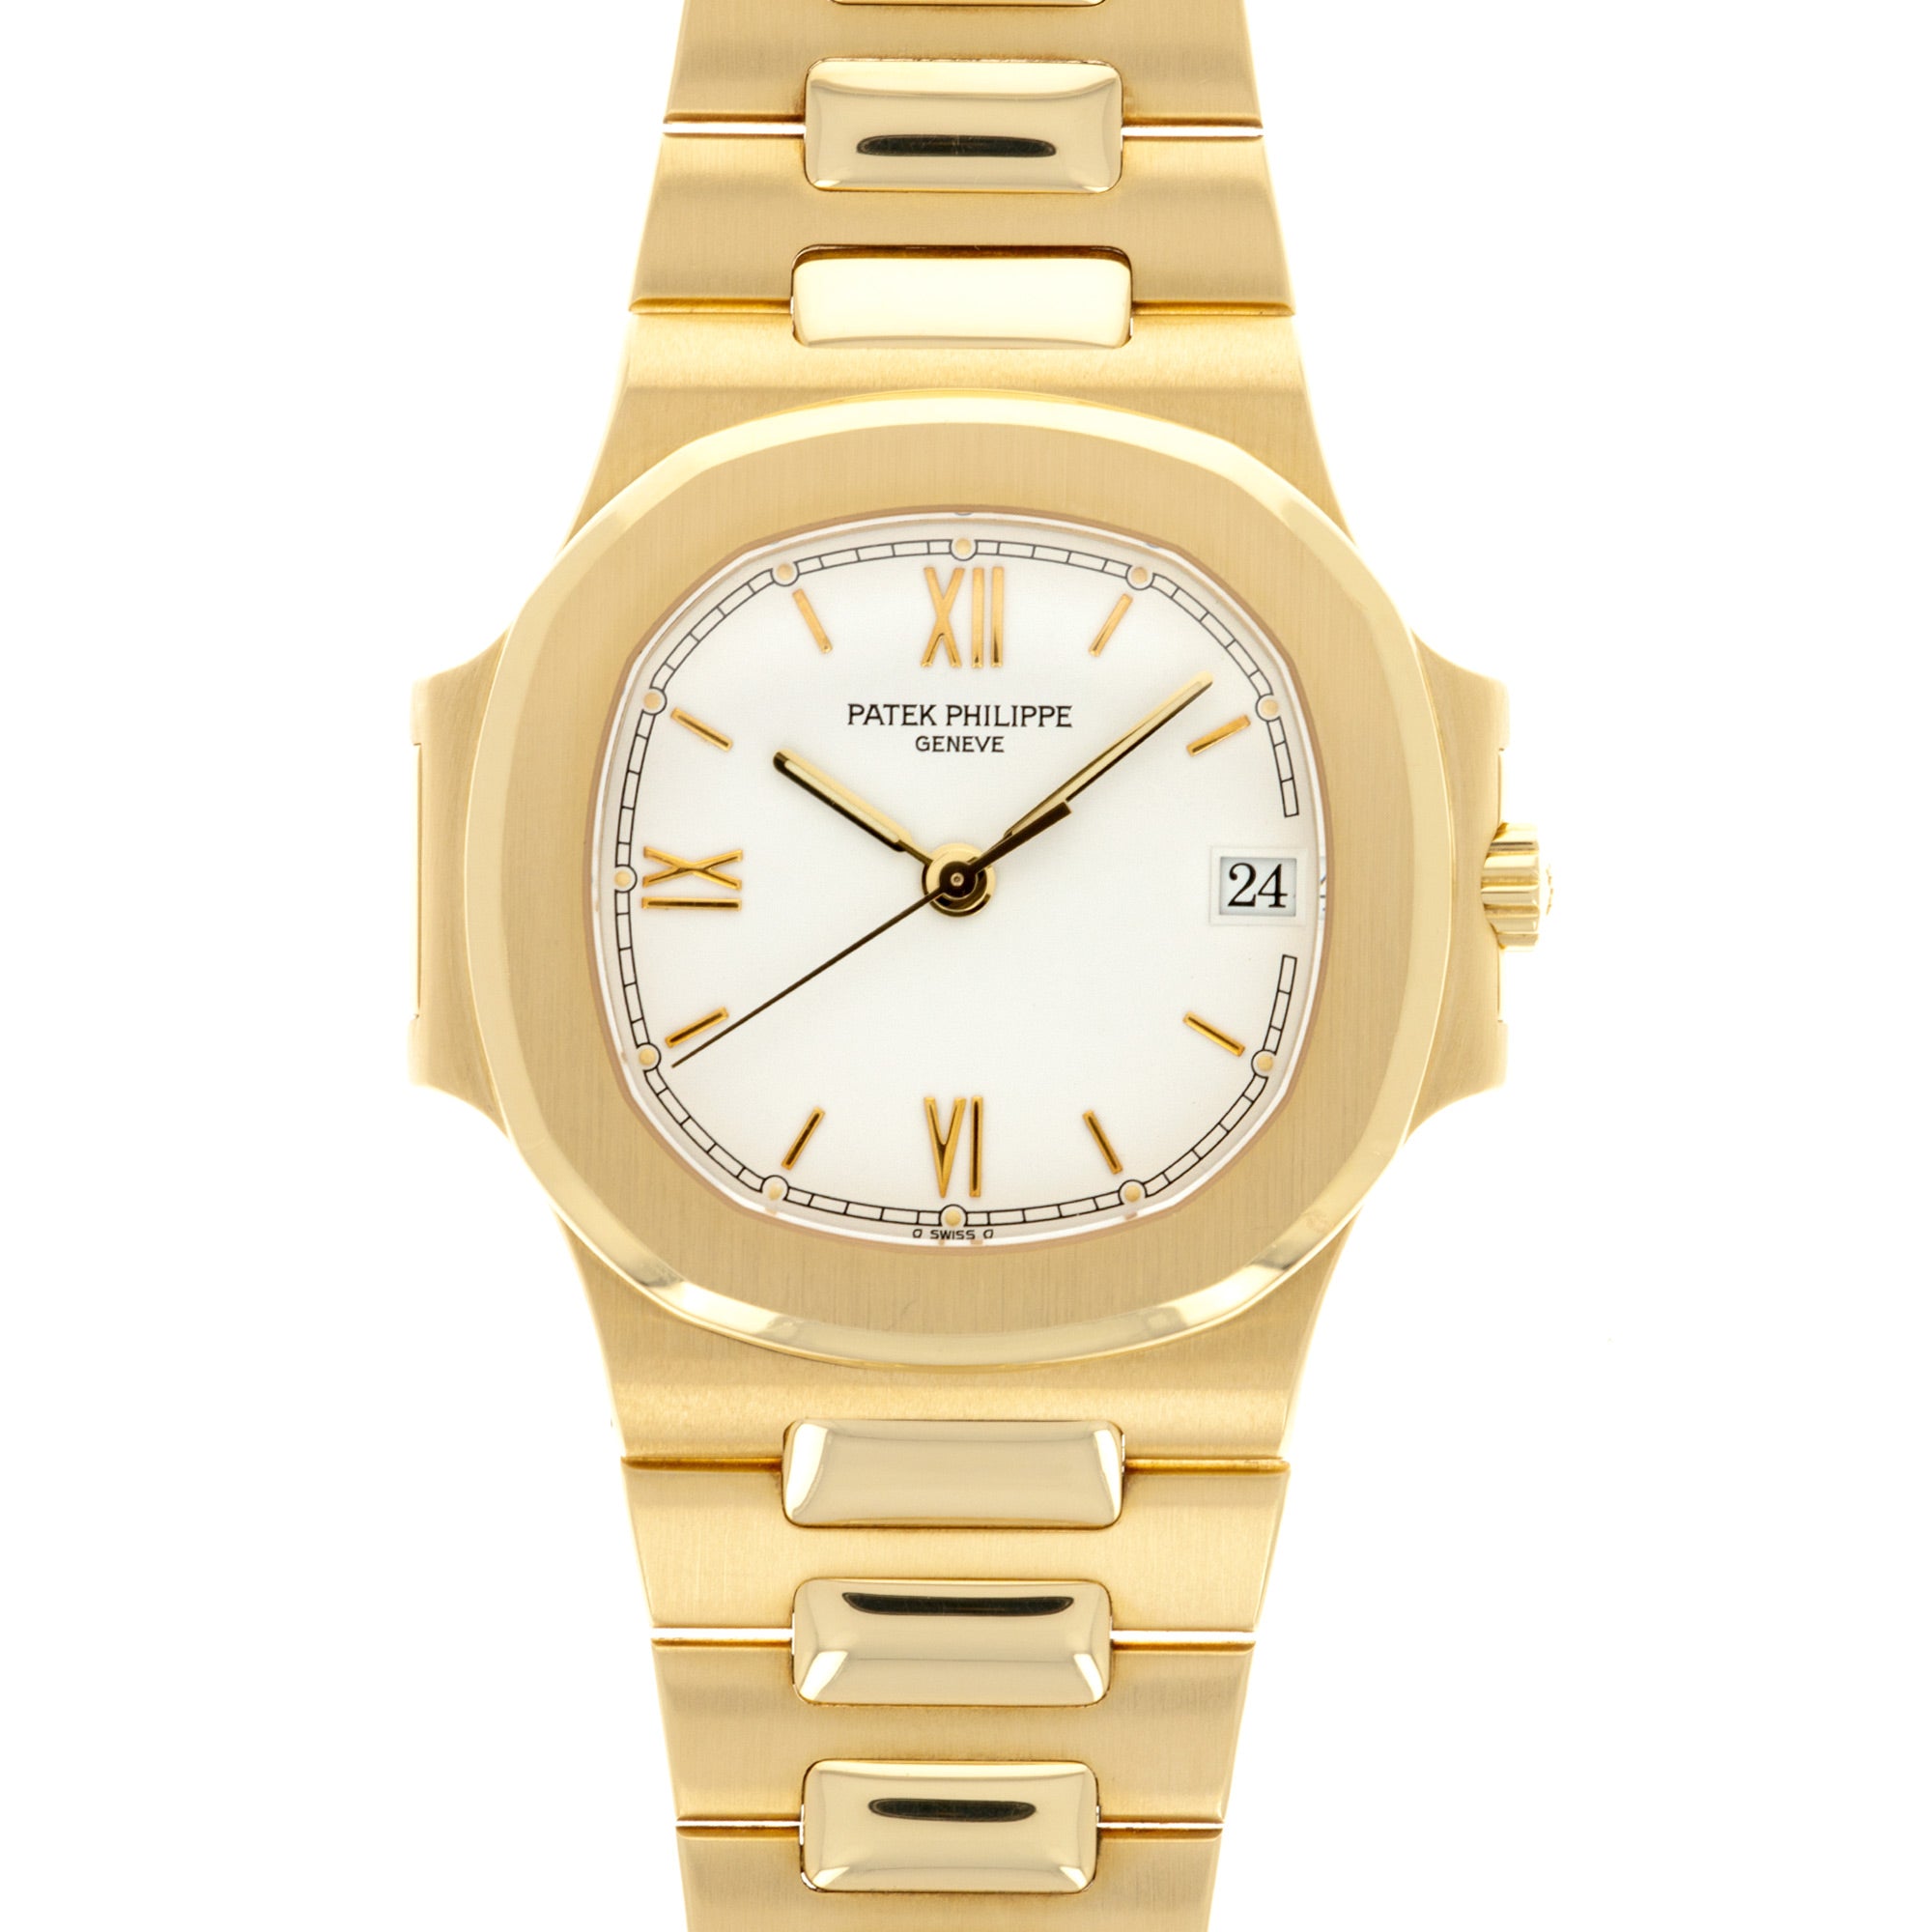 Patek Philippe - Patek Philippe Yellow Gold Nautilus Watch Ref. 3800 with Rare White Roman Numerals Dial - The Keystone Watches